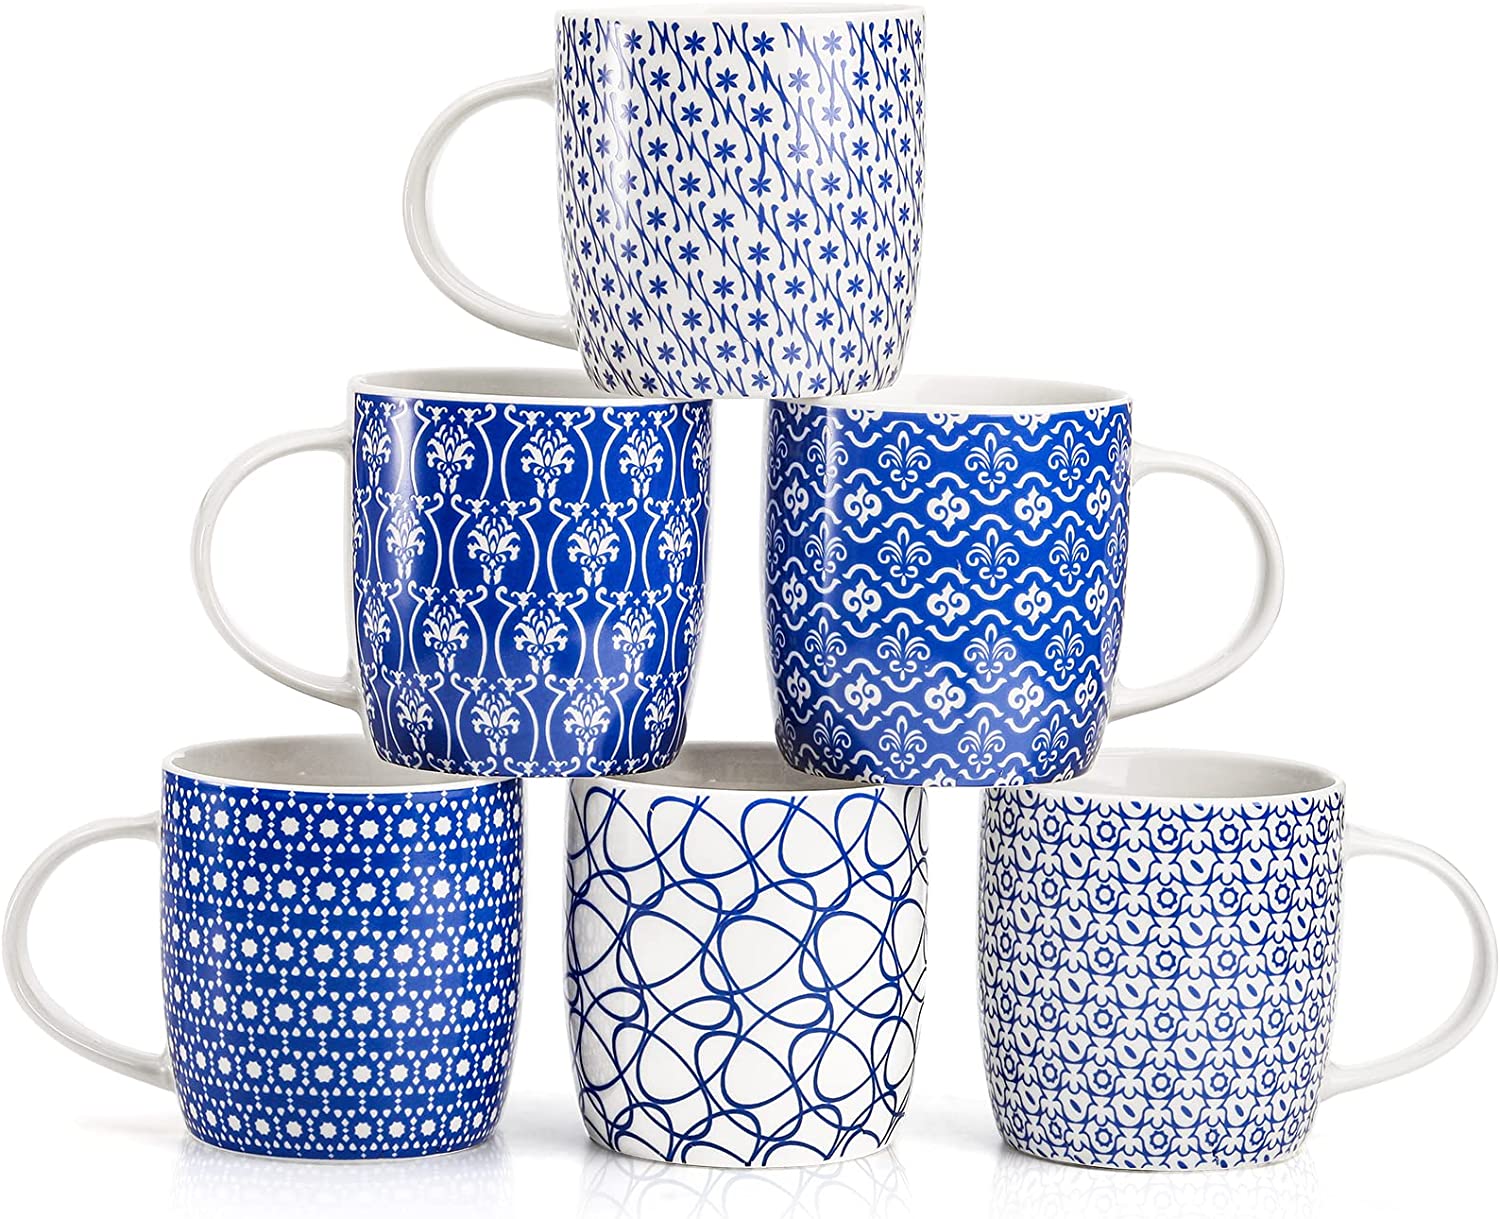 Sweese Coffee Mugs, Porcelain Coffee Mugs Set Of 6-11 Ounce Coffee